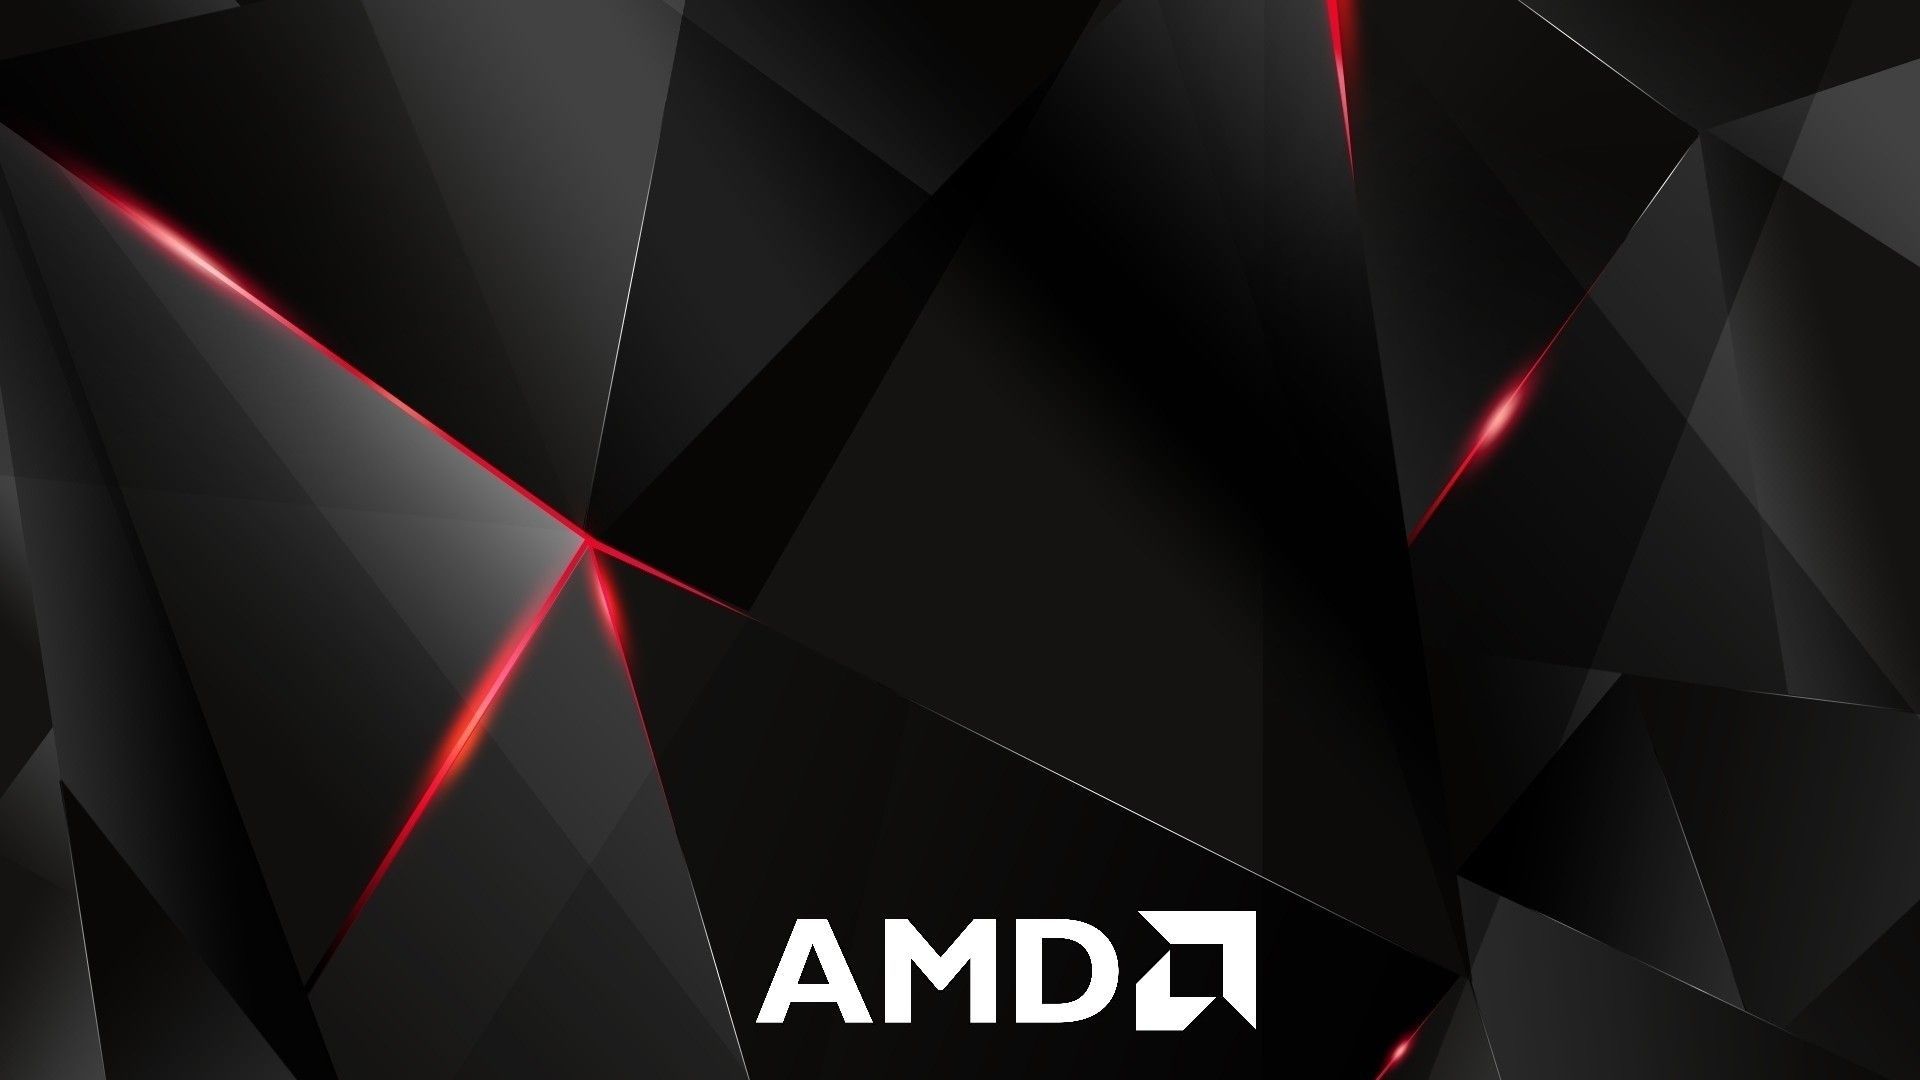 AMD Logo Wallpaper Free AMD Logo Background